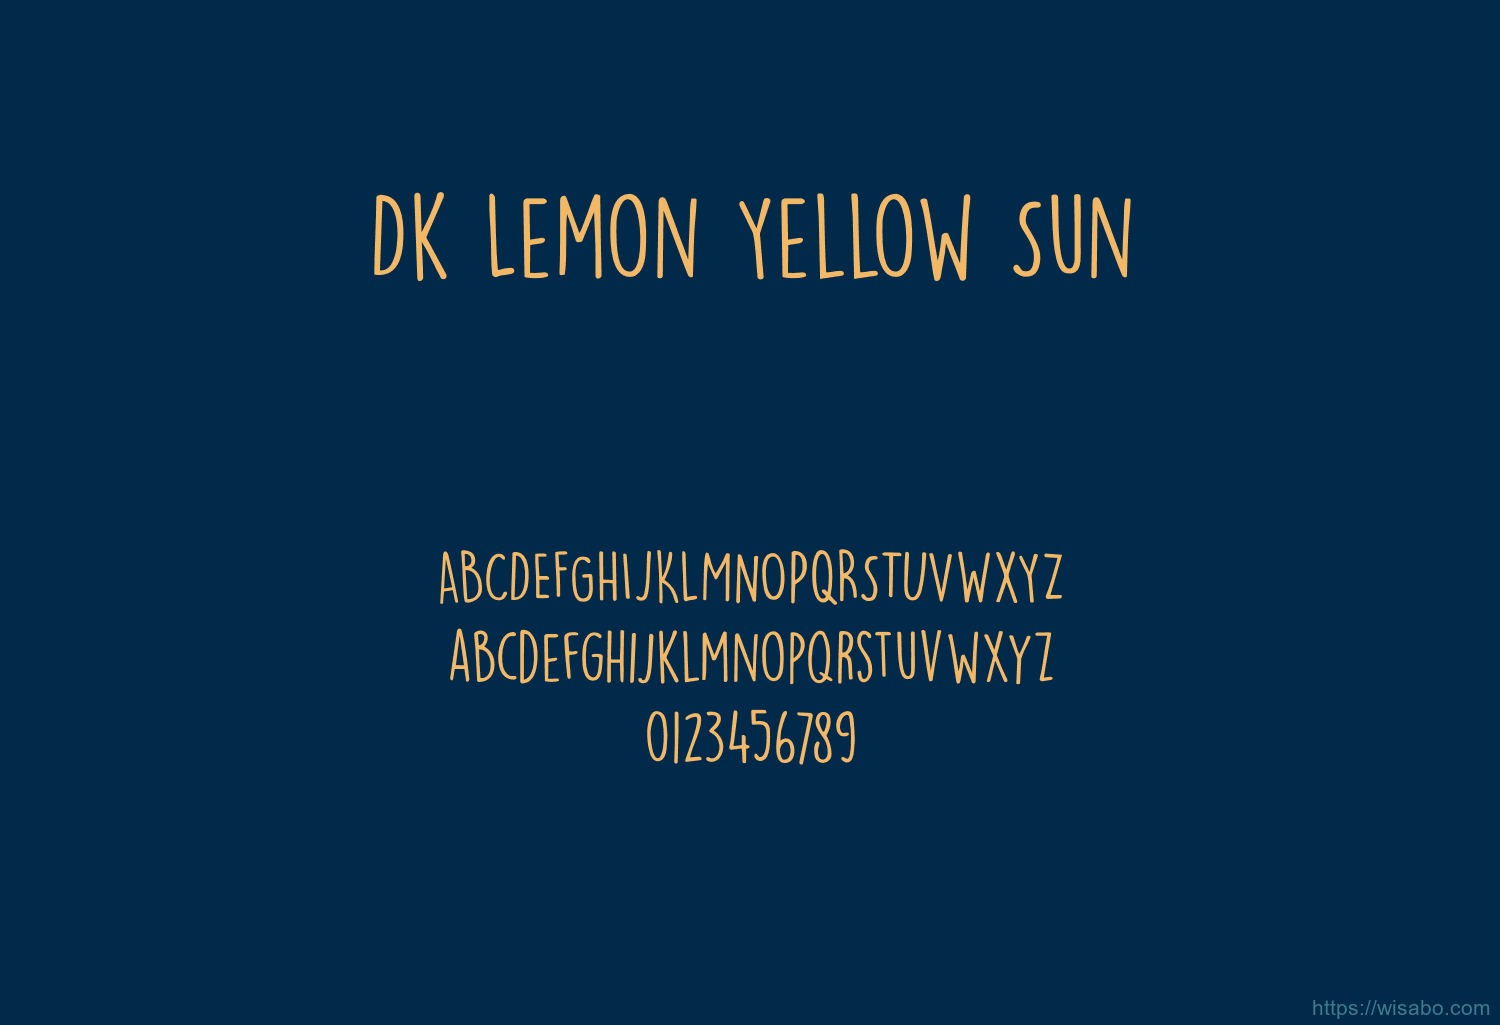 Dk Lemon Yellow Sun